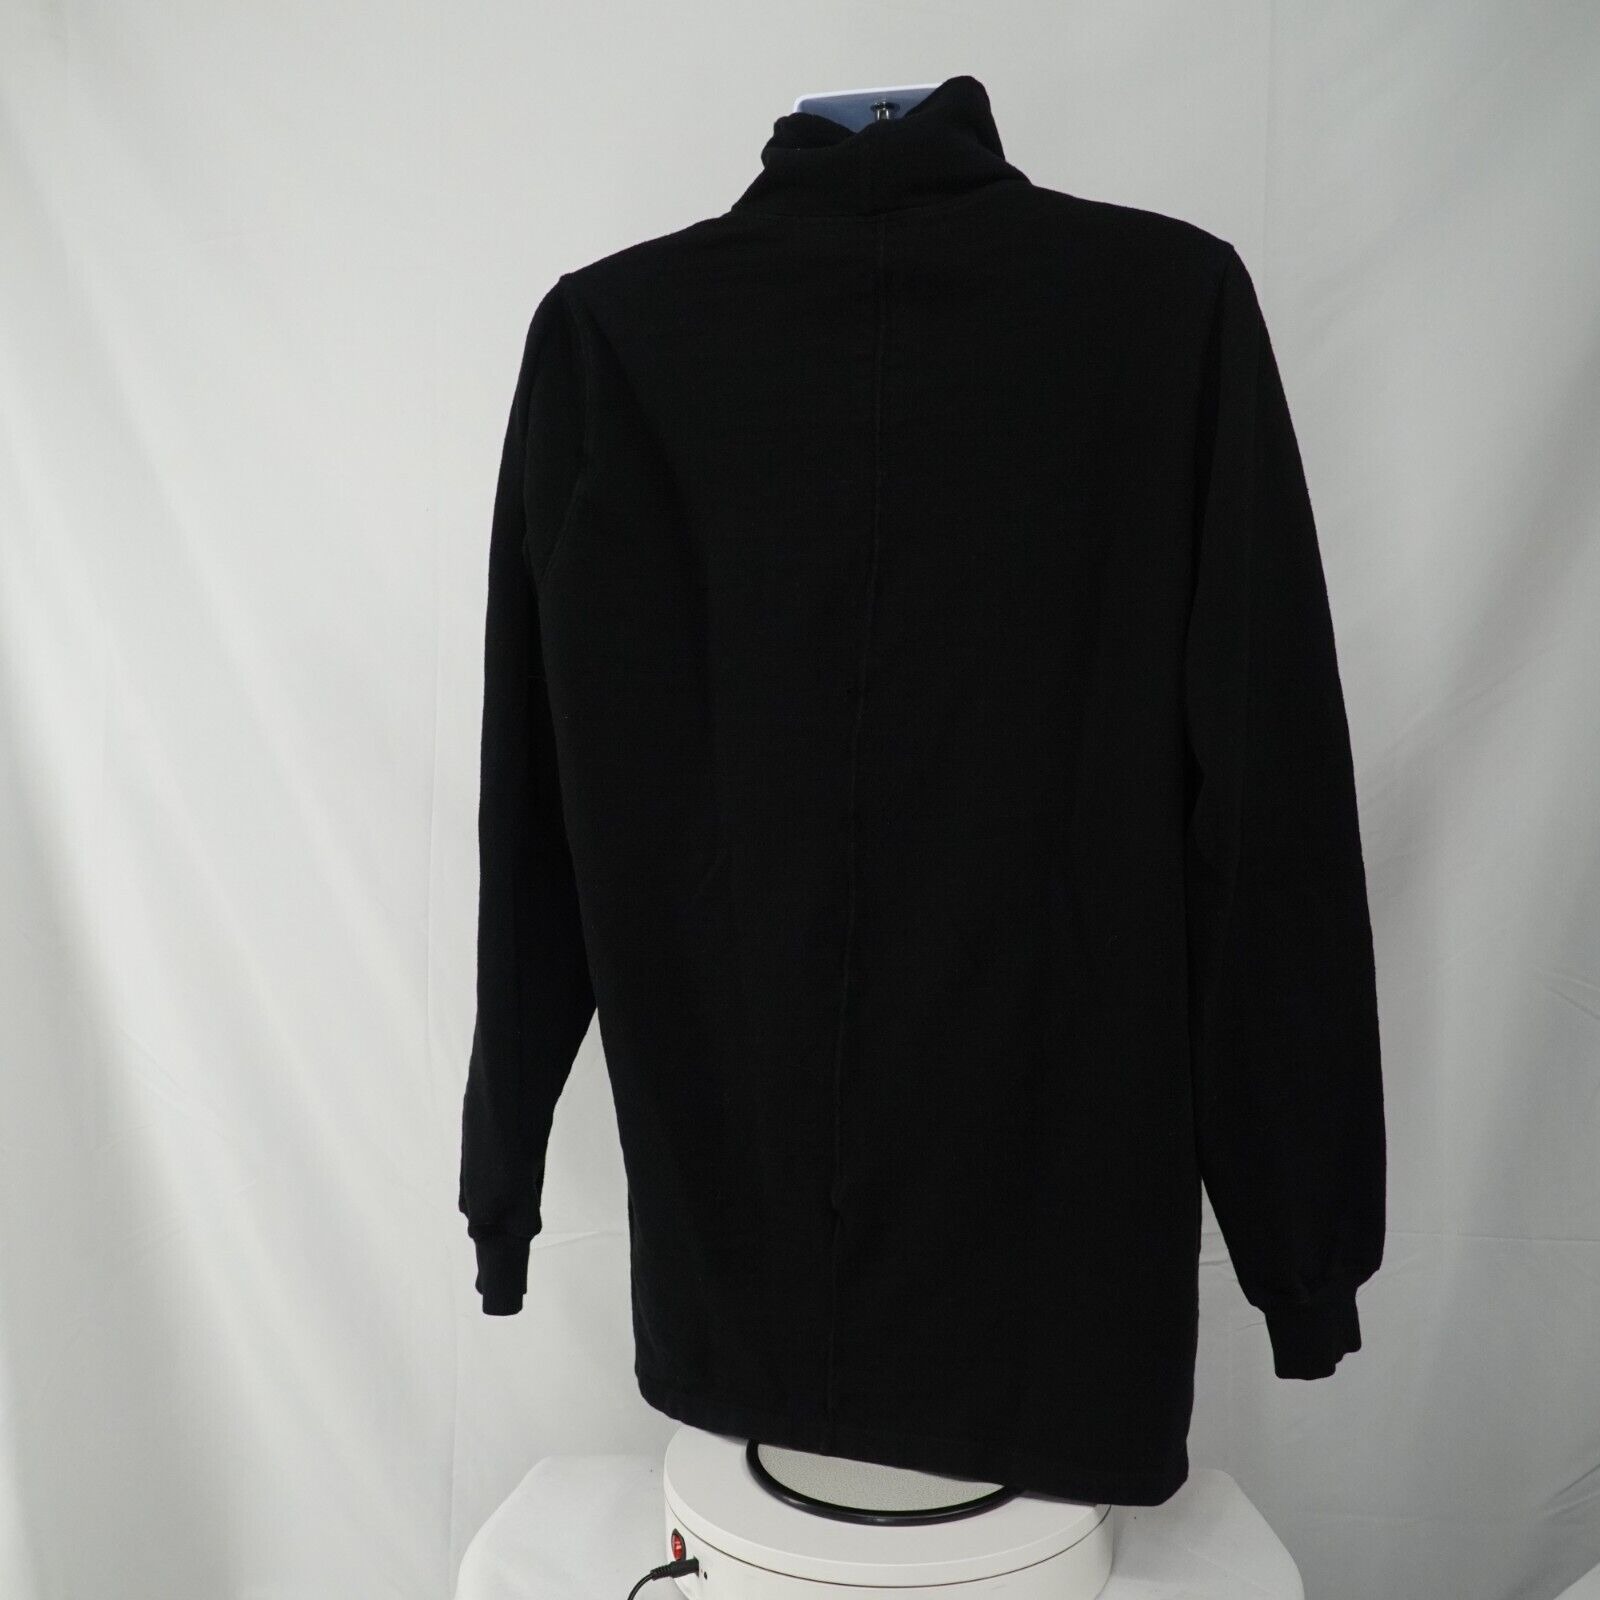 Rick Black Turtleneck Sweater Size Medium FW17 Glitter - 14